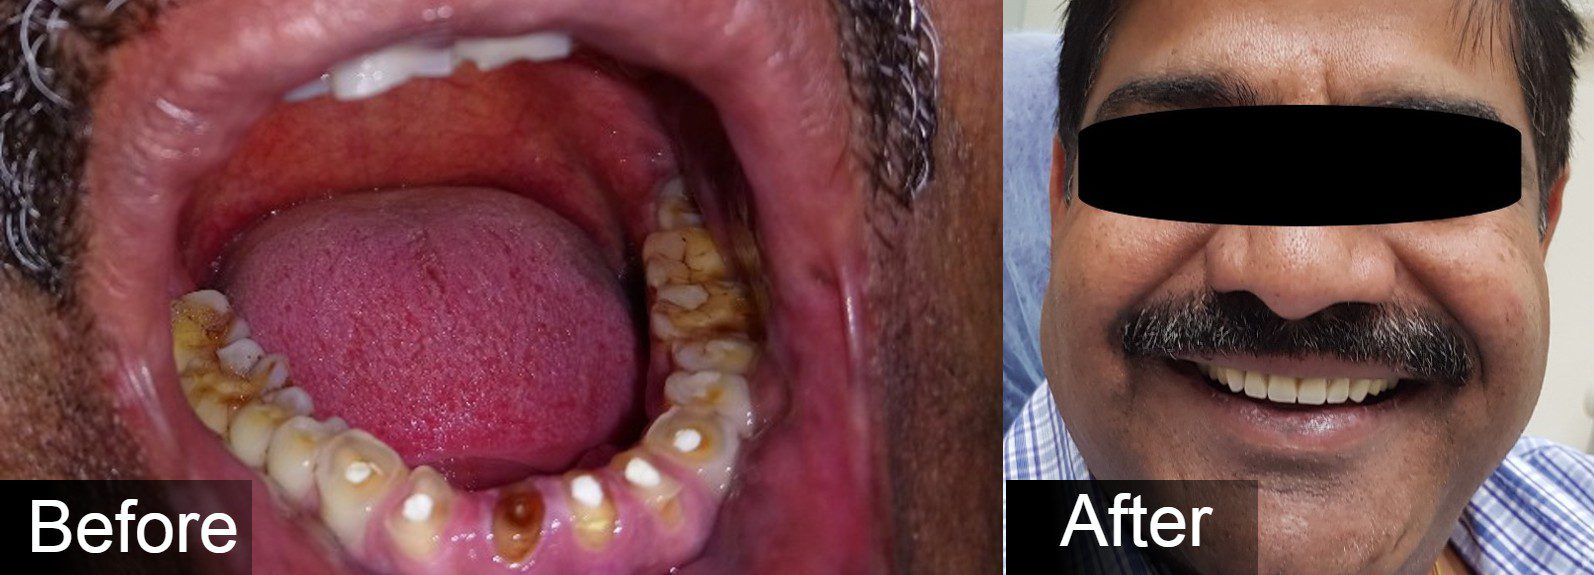 Full Mouth Rehabilitation Images